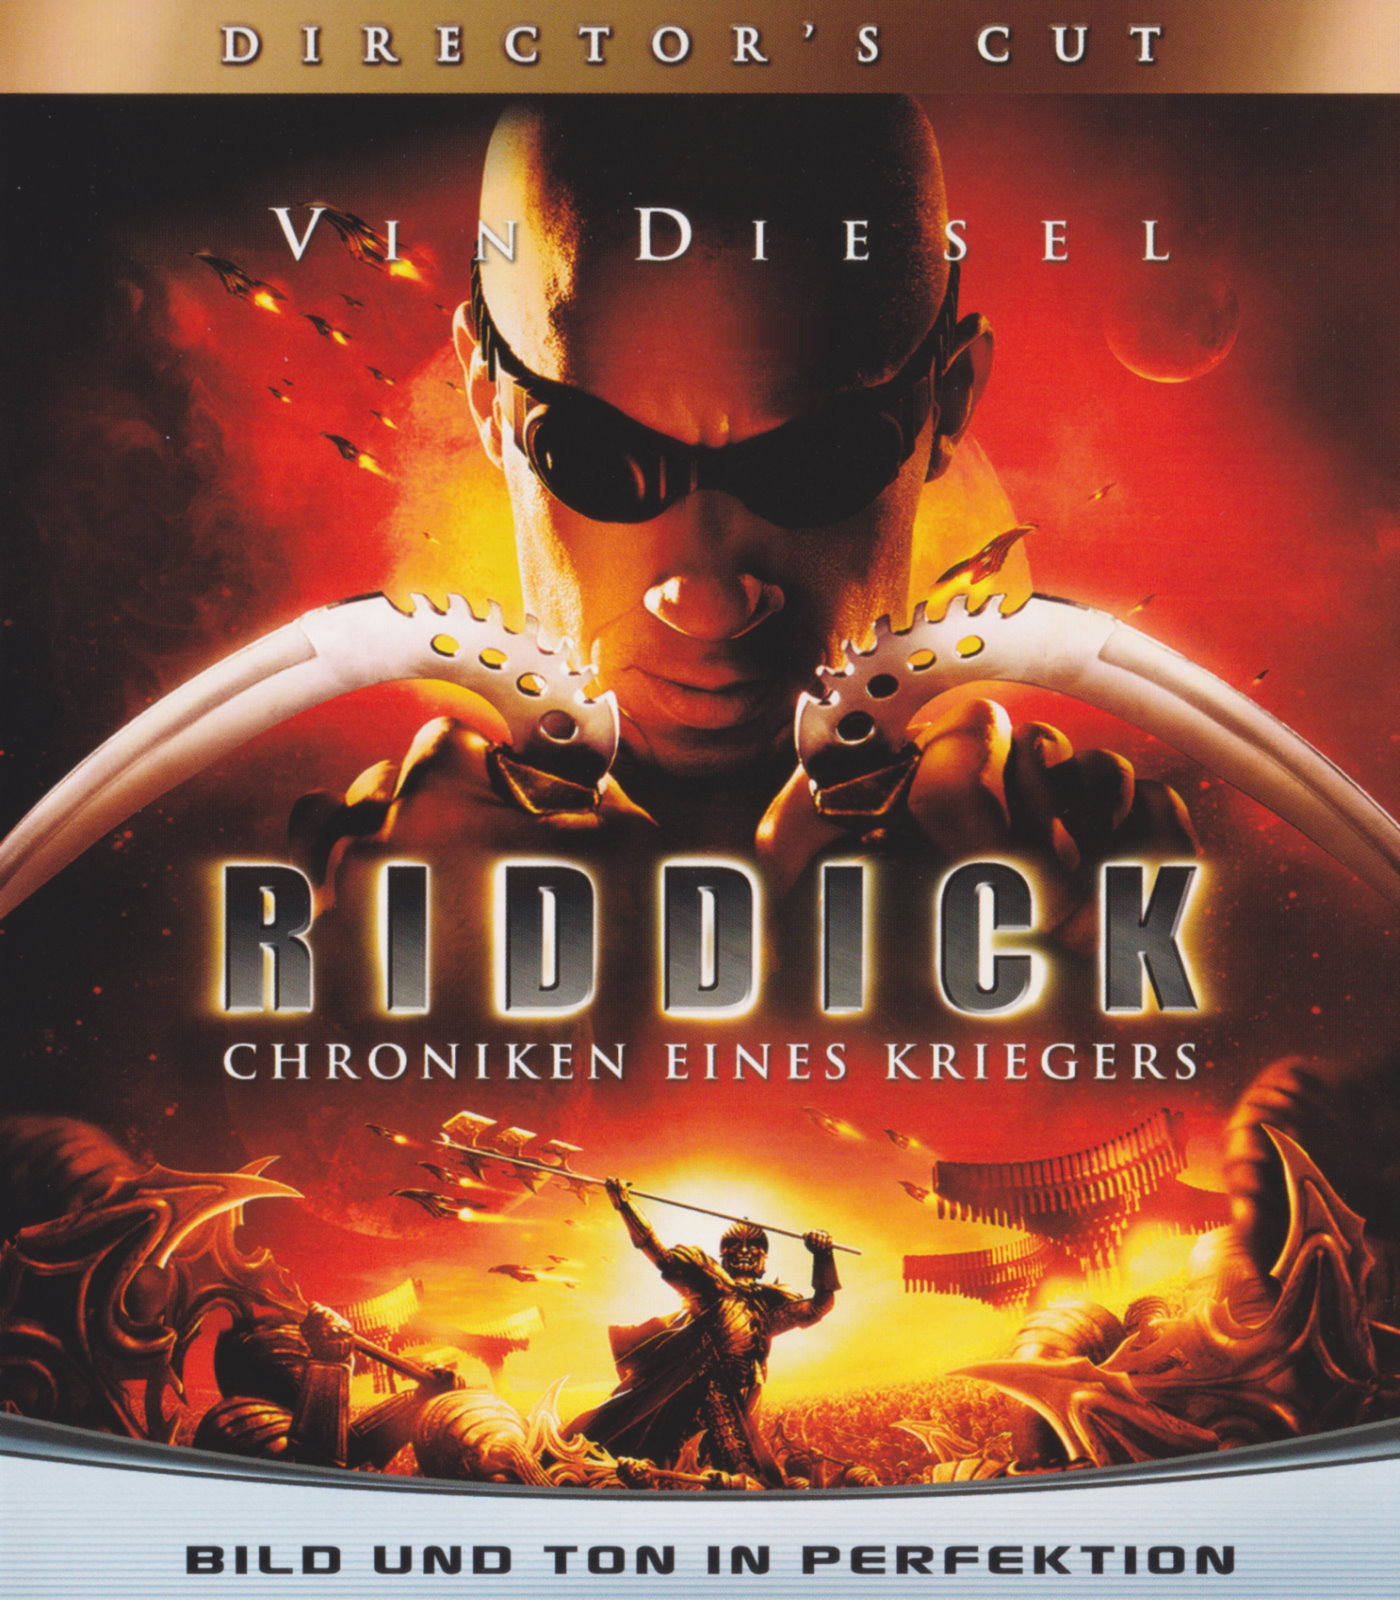 Cover - Riddick - Chroniken eines Krieger.jpg